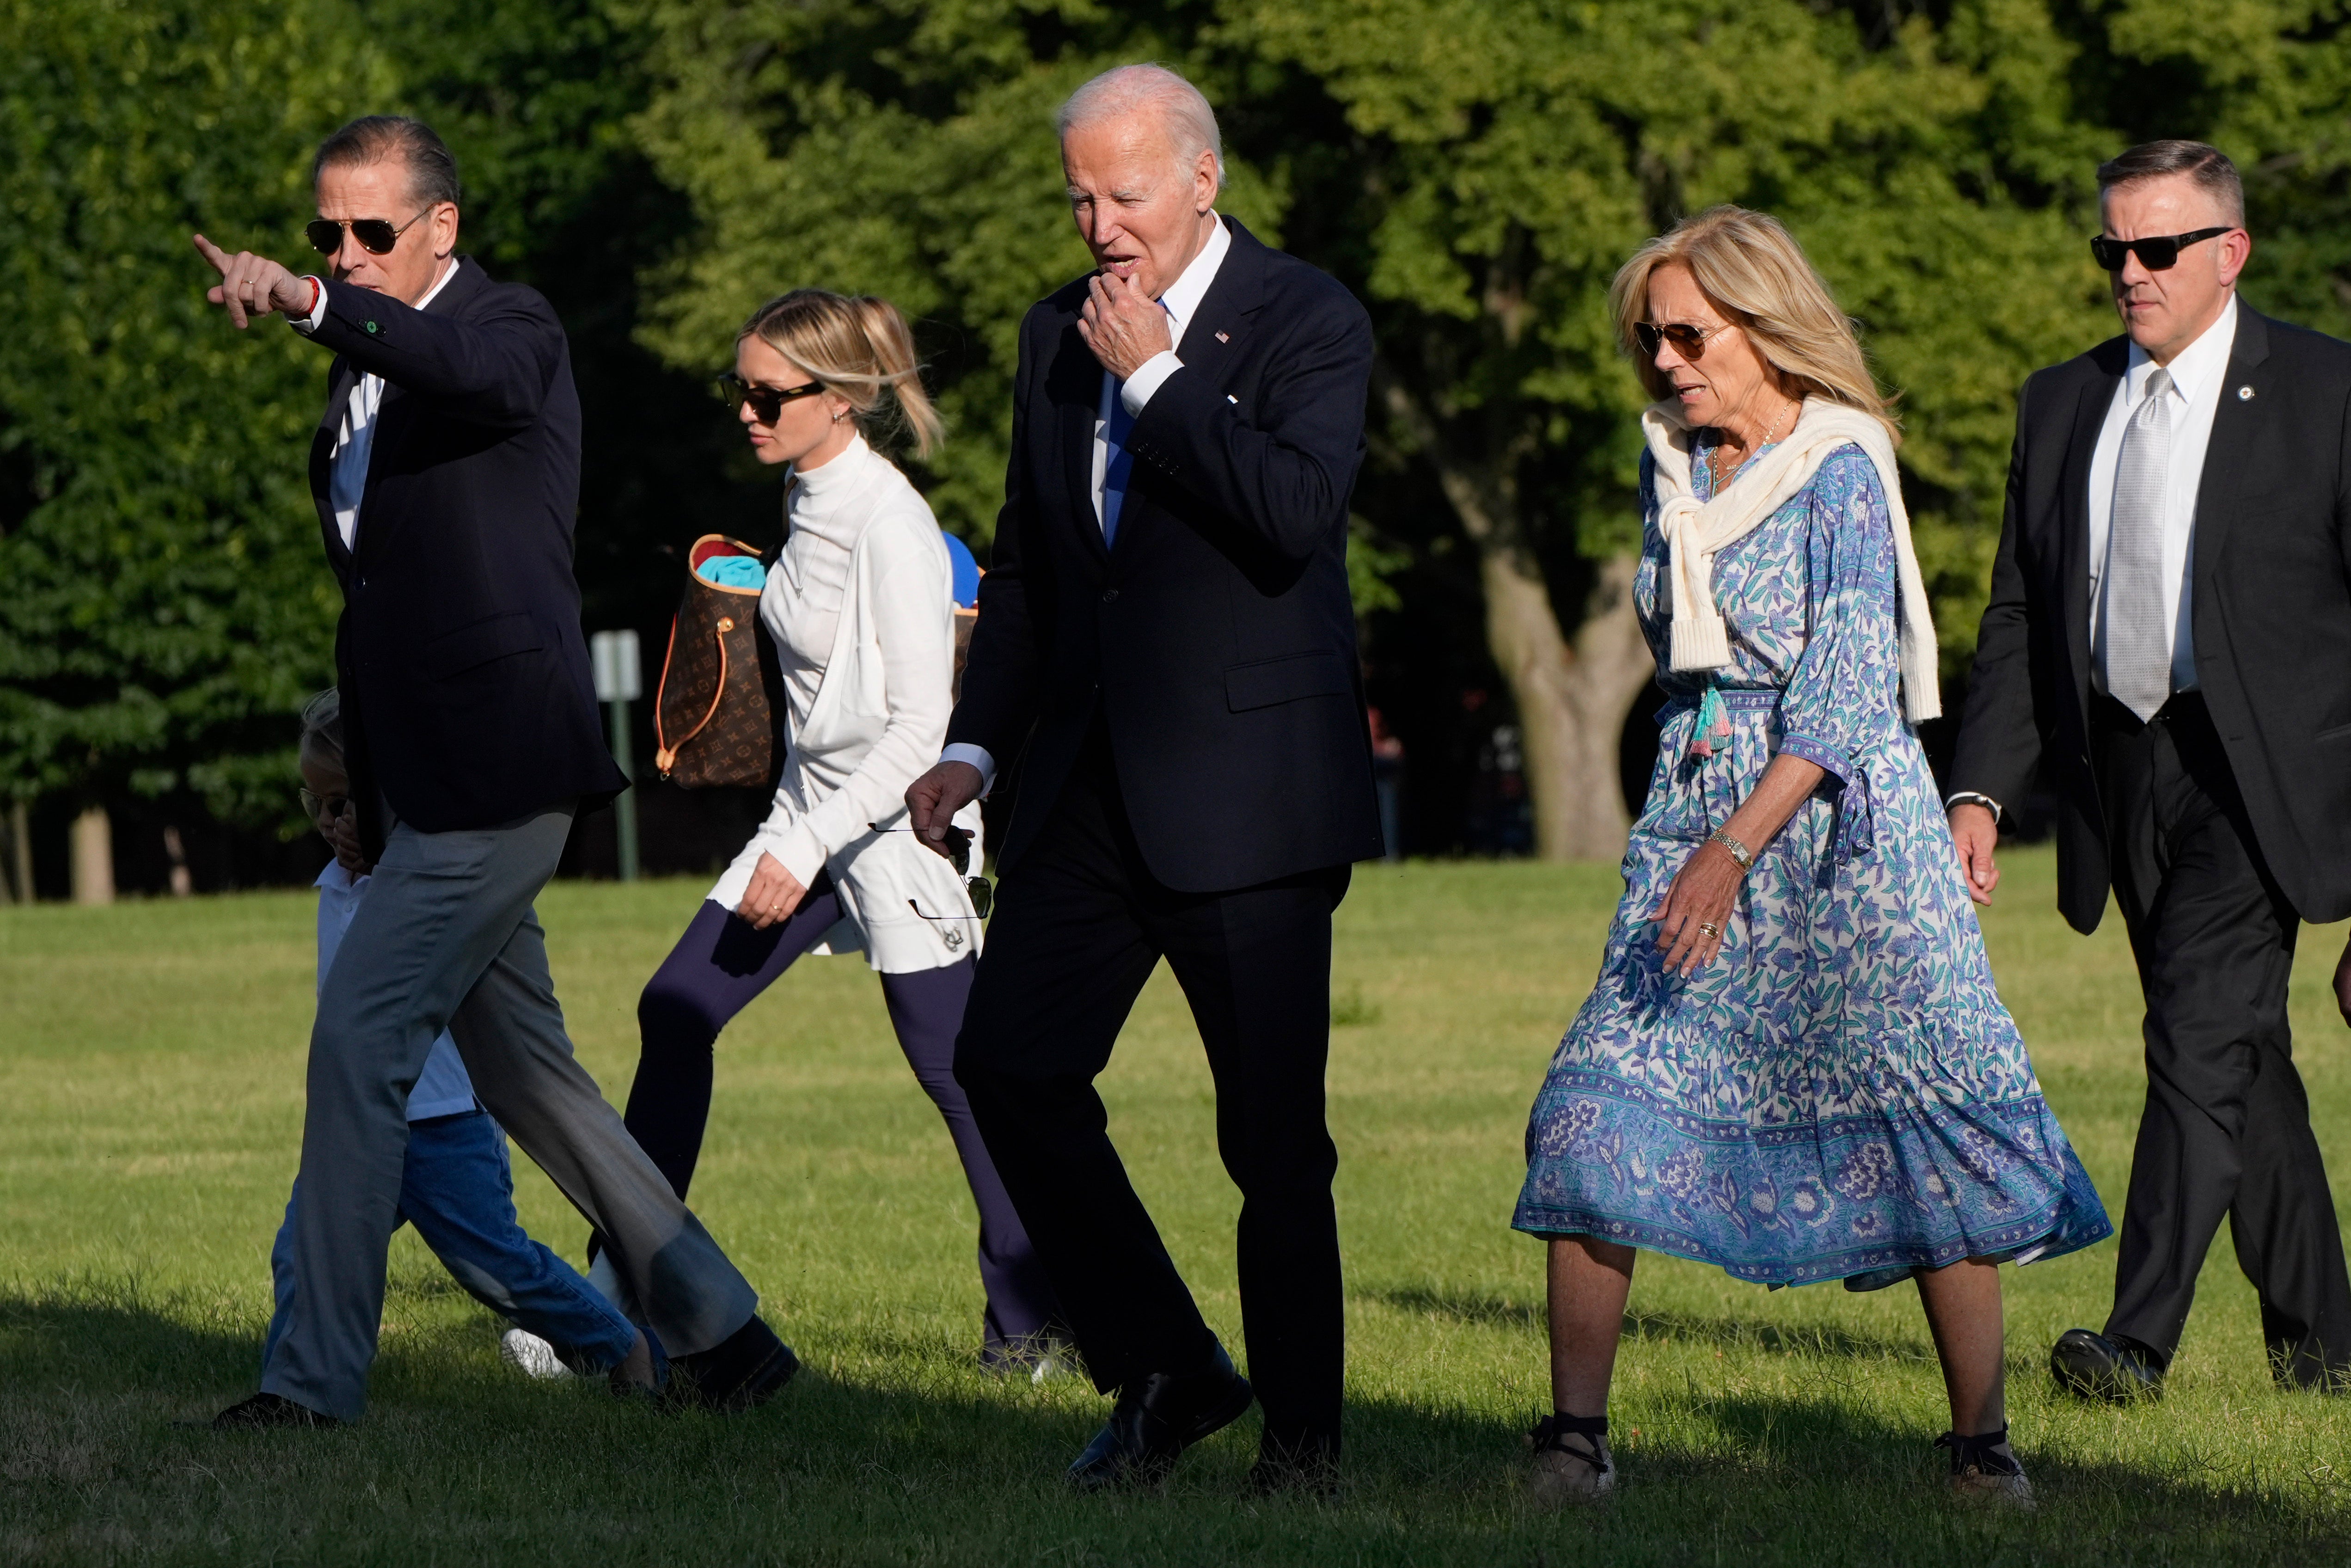 President Joe Biden, first lady Jill Biden and son Hunter Biden, left, arrive in Washington DC on 1 July